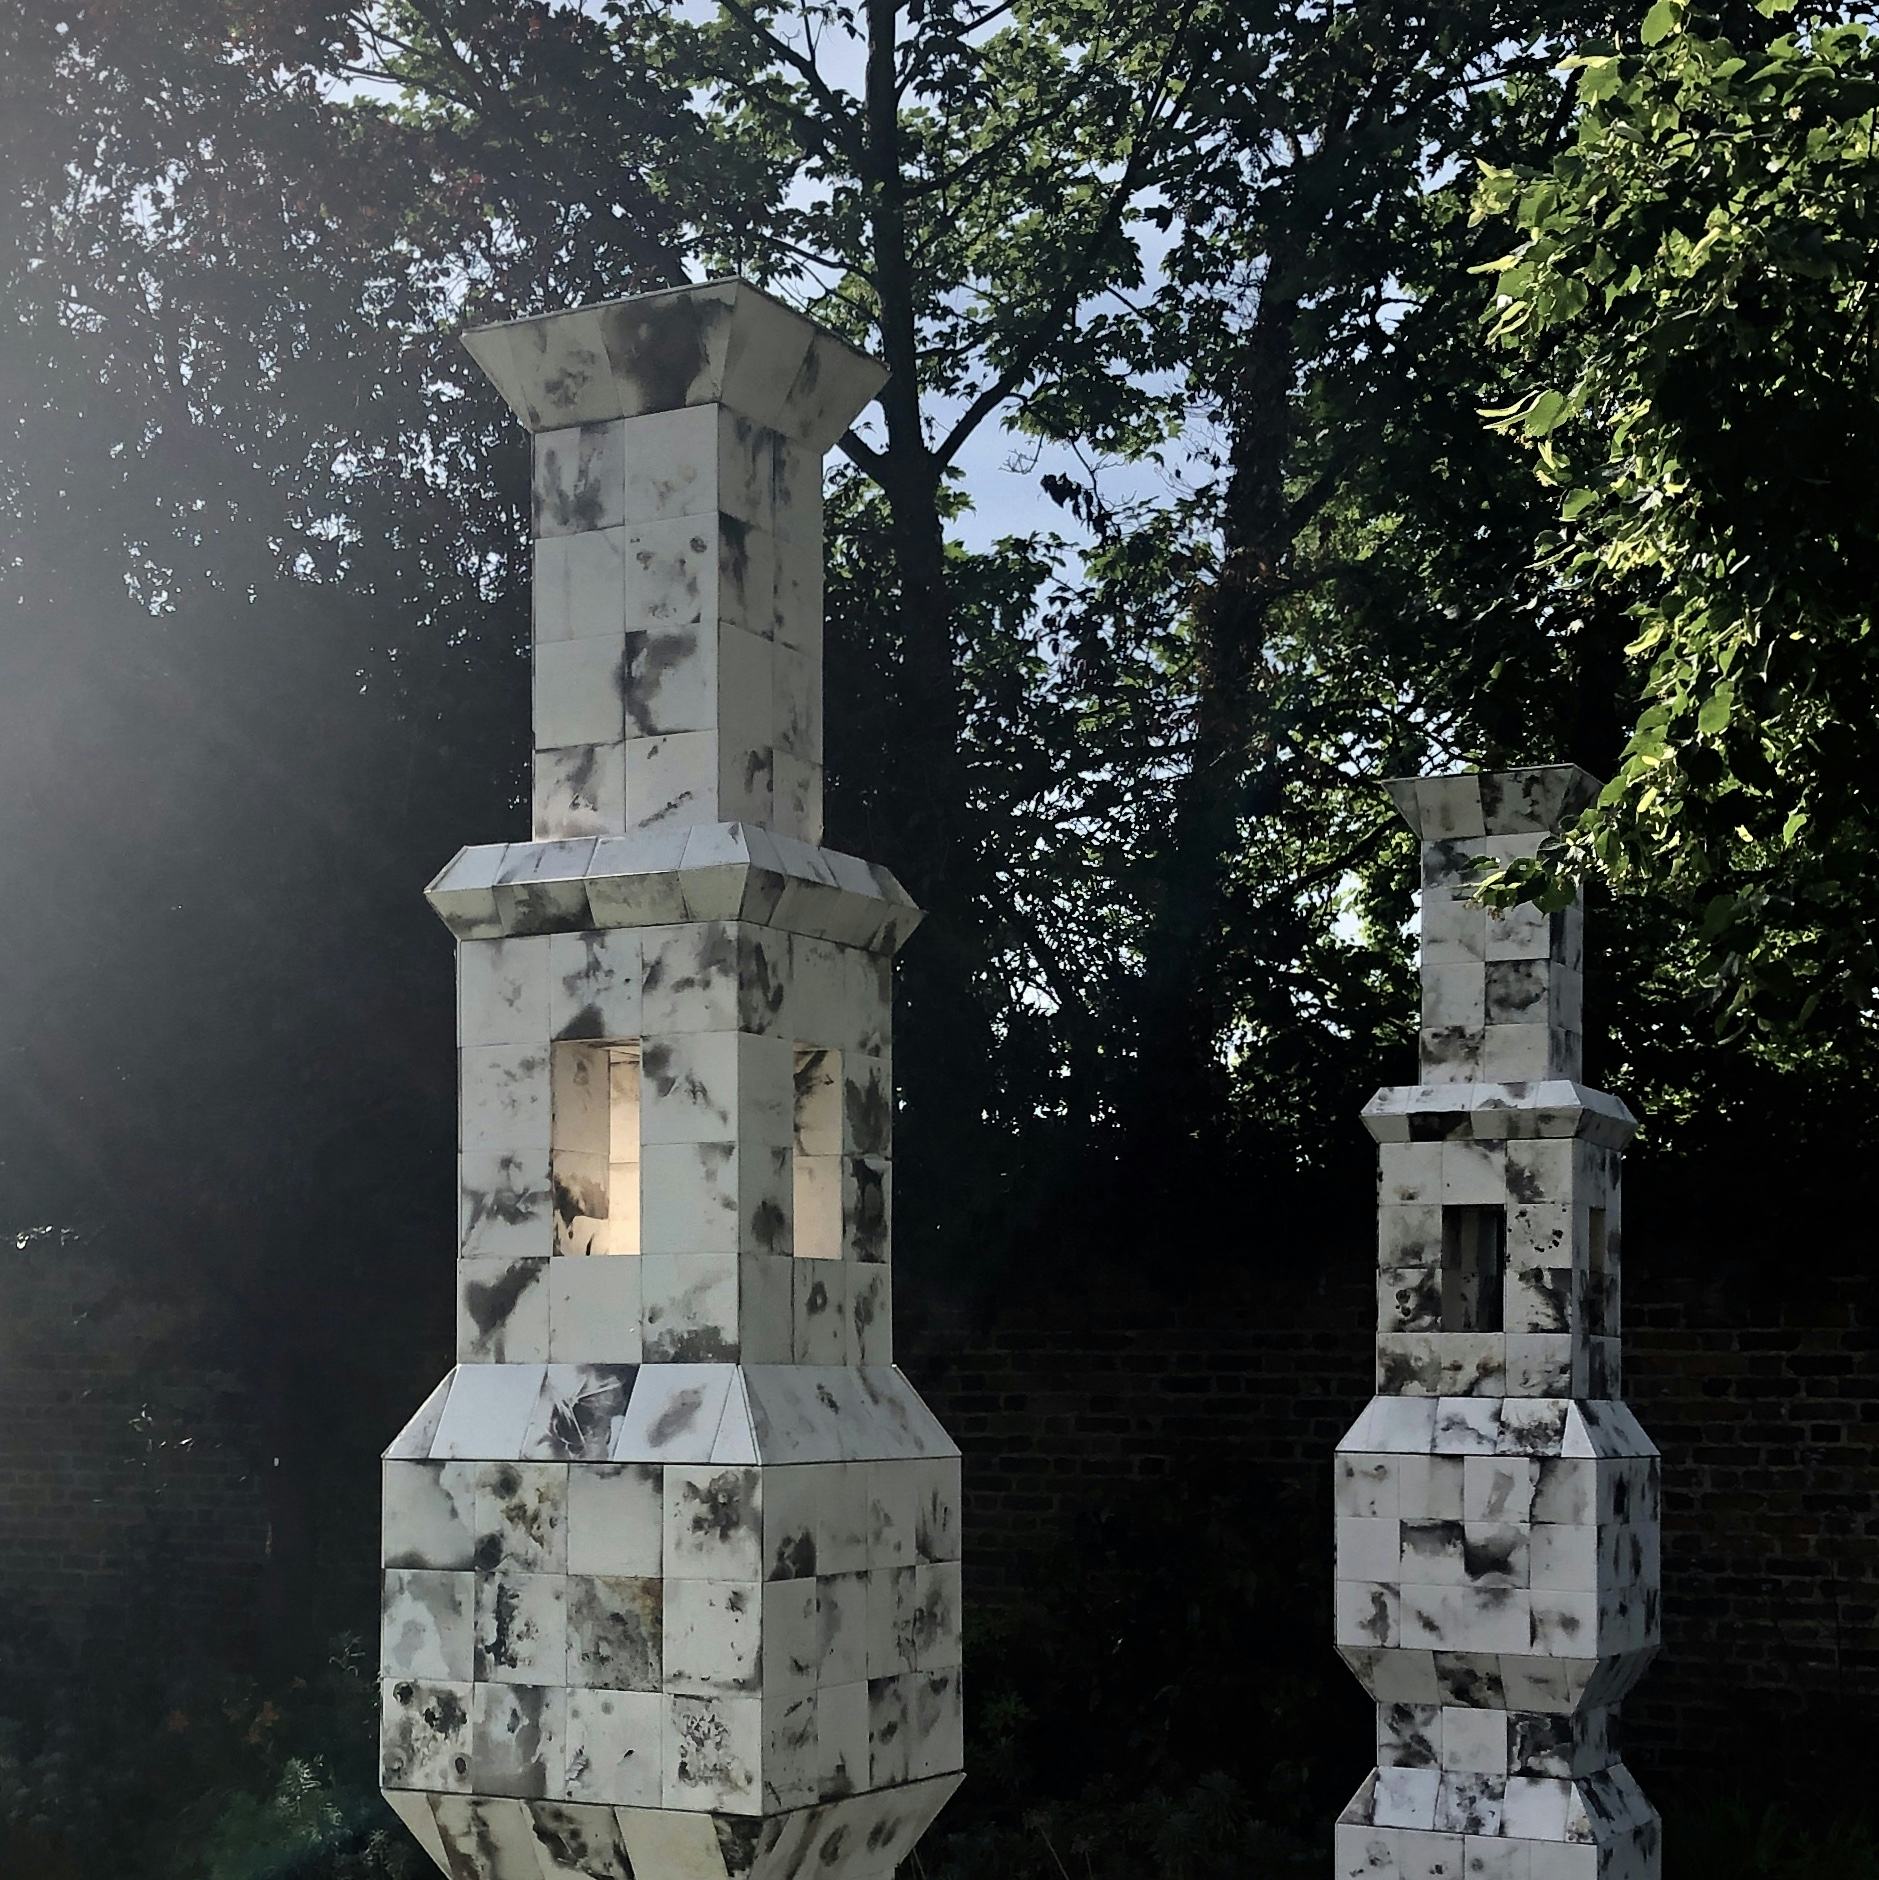 A detail of two ceramic tiled lanterns